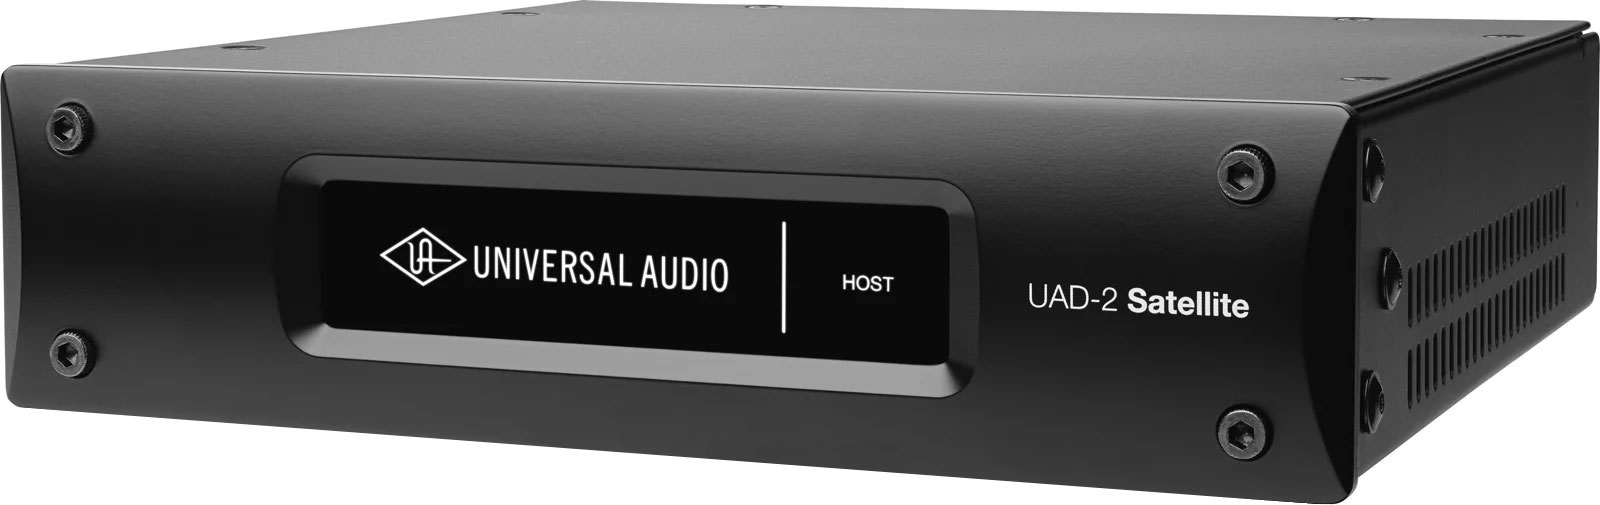 UNIVERSAL AUDIO UAD-2 SATELLITE USB OCTO CORE